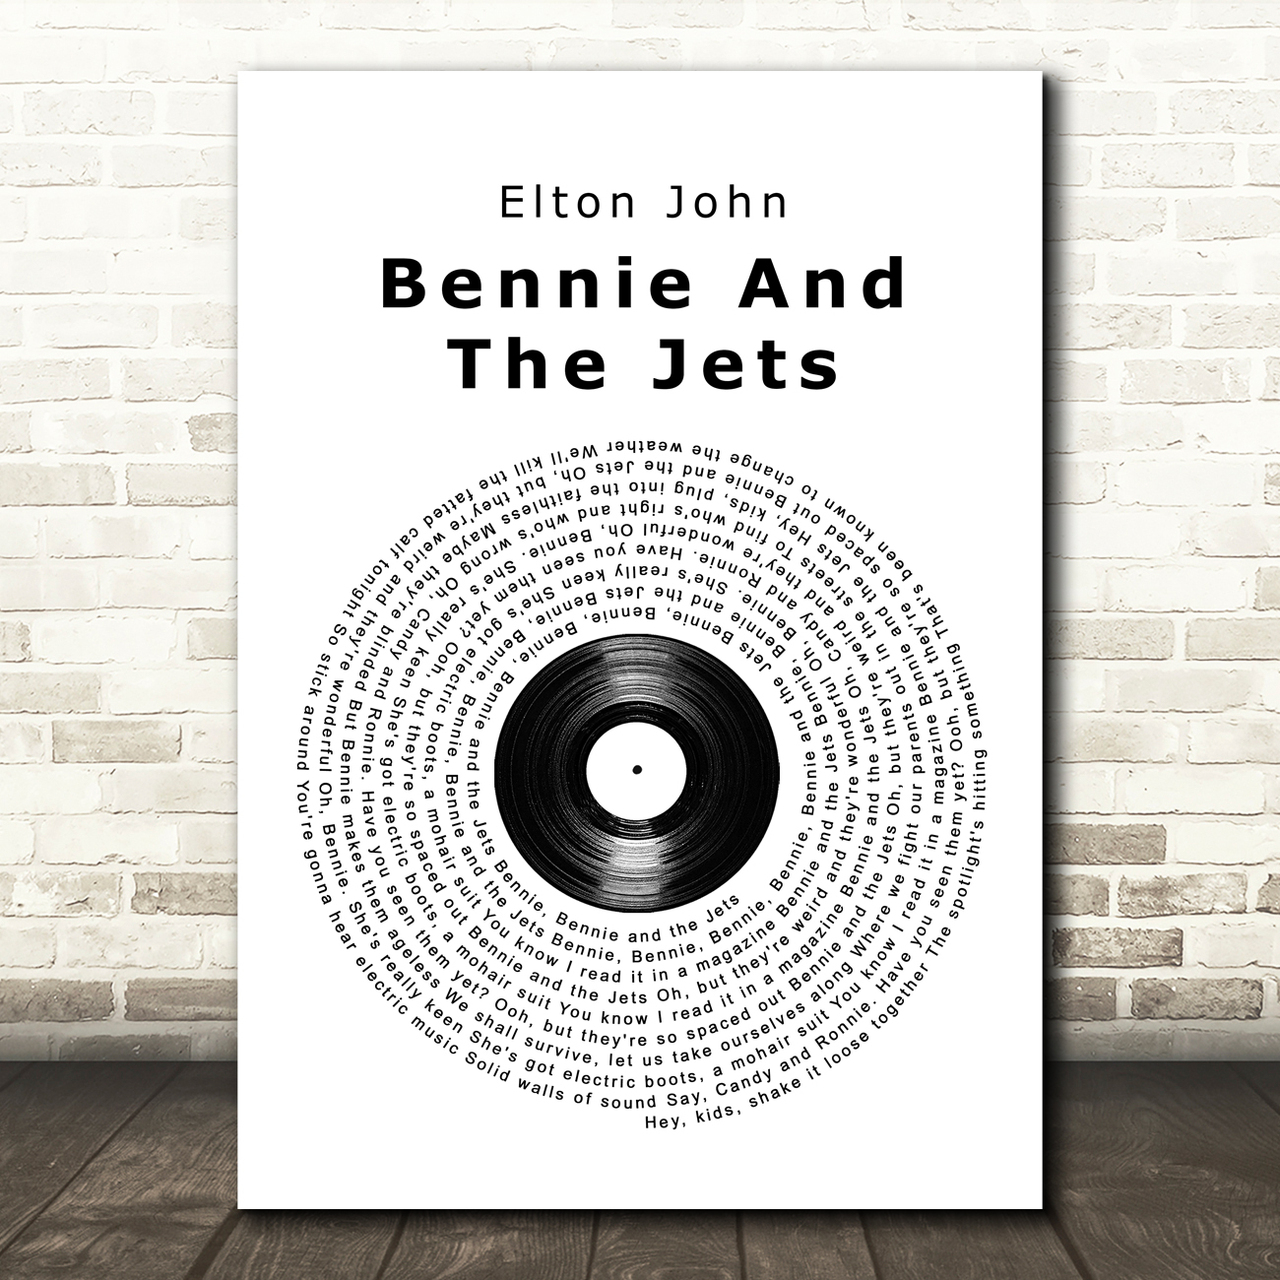 Elton John Bennie And The Jets Vinyl Record Song Lyric Wall Art Print